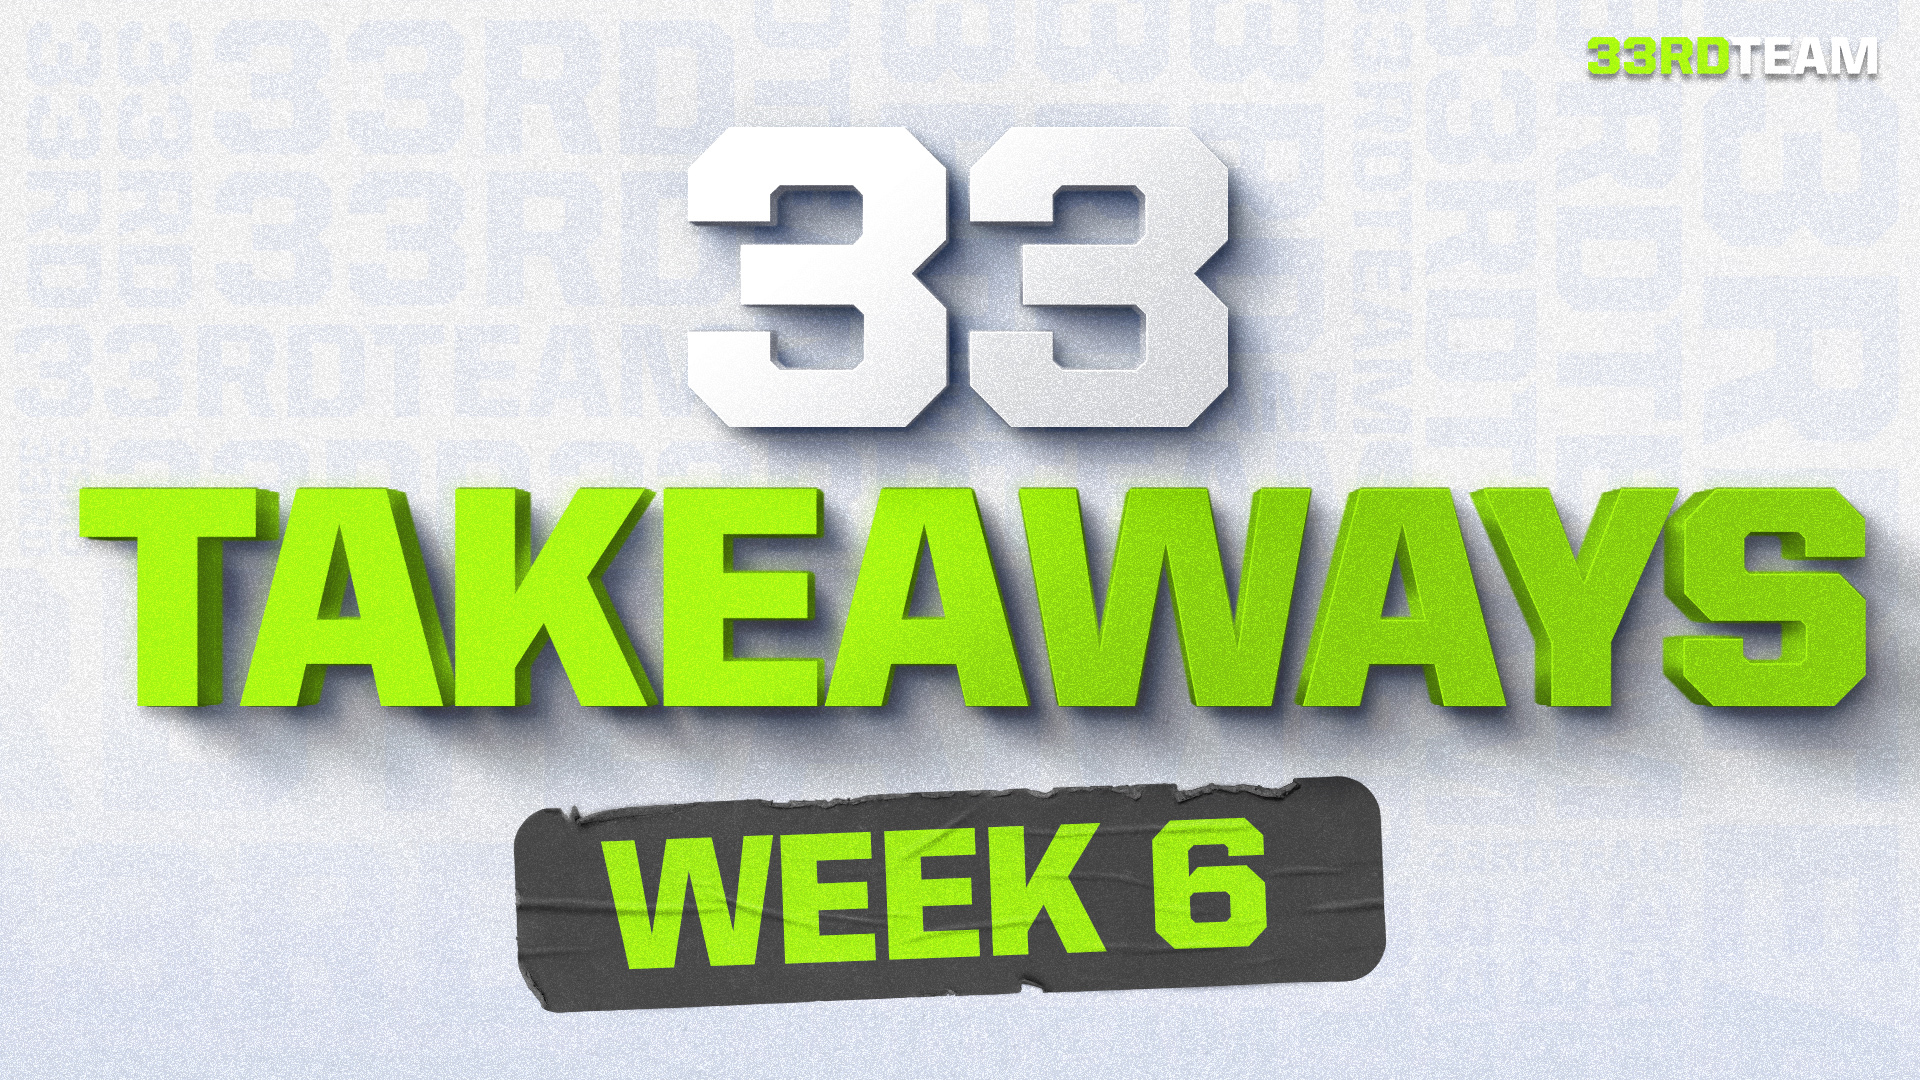 What We Learned: 33 Expert Takeaways From Week 6